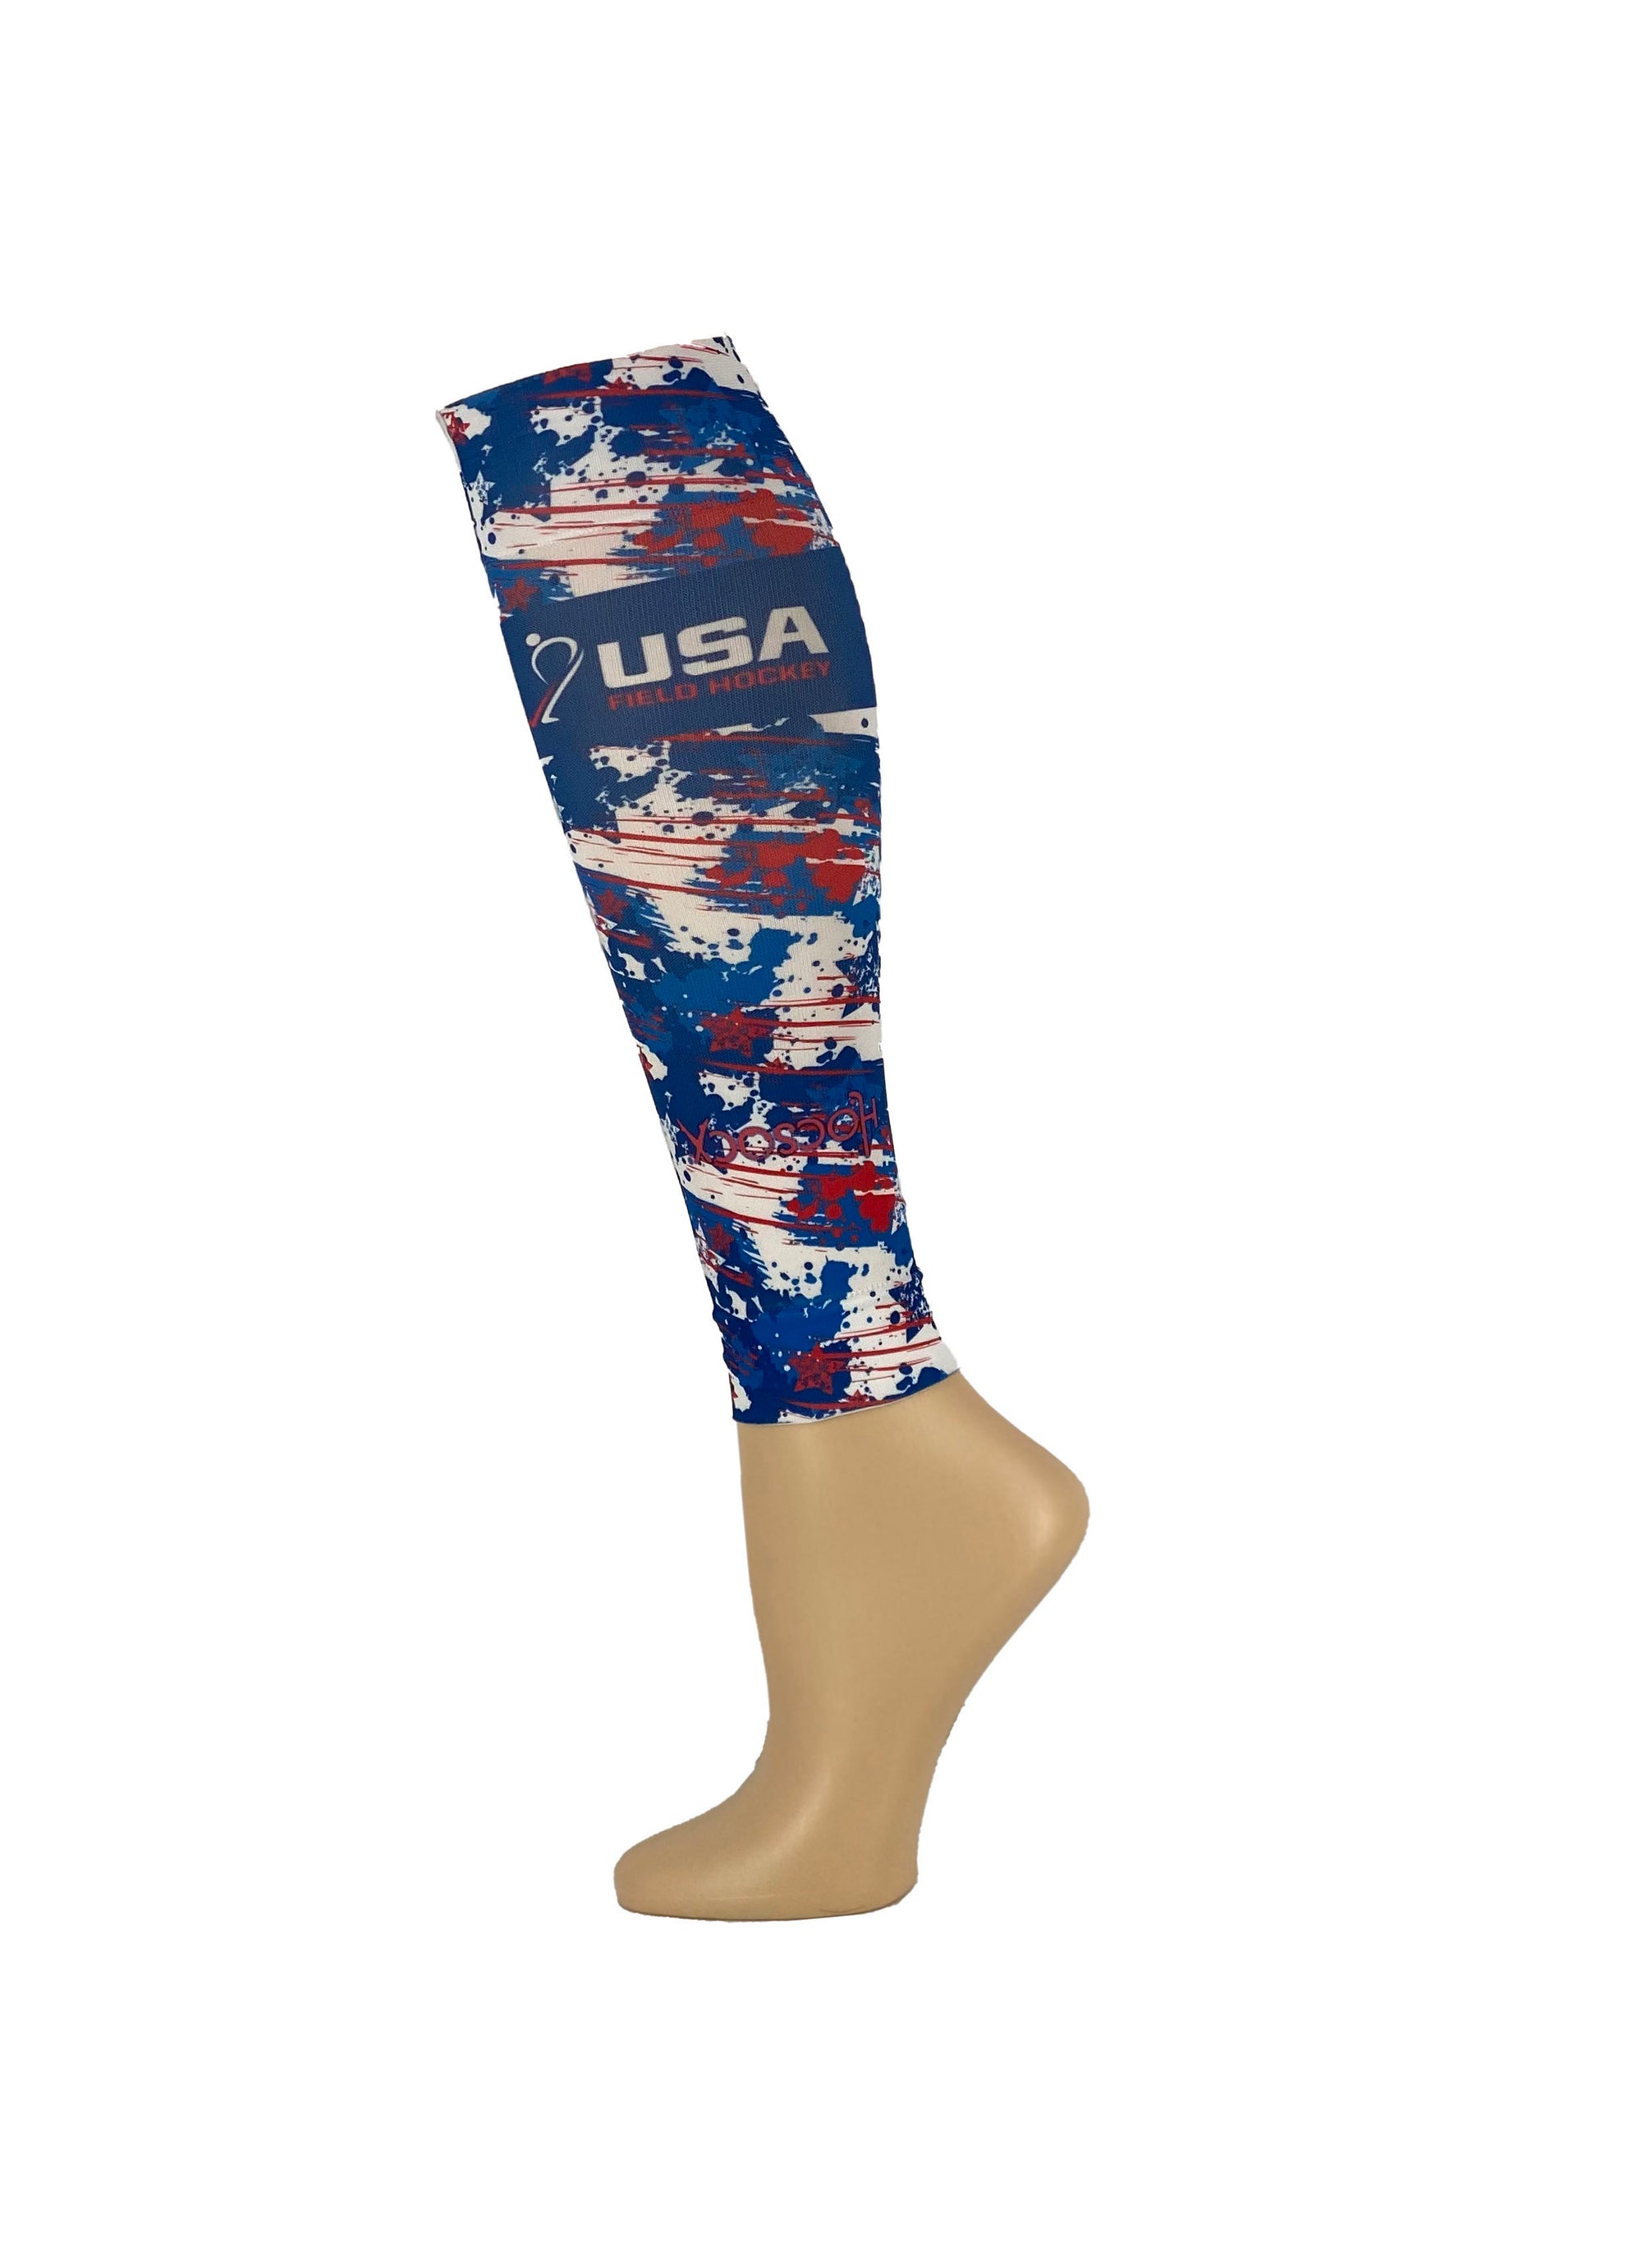 USA Field Hockey 2022 Official Leg Sleeves